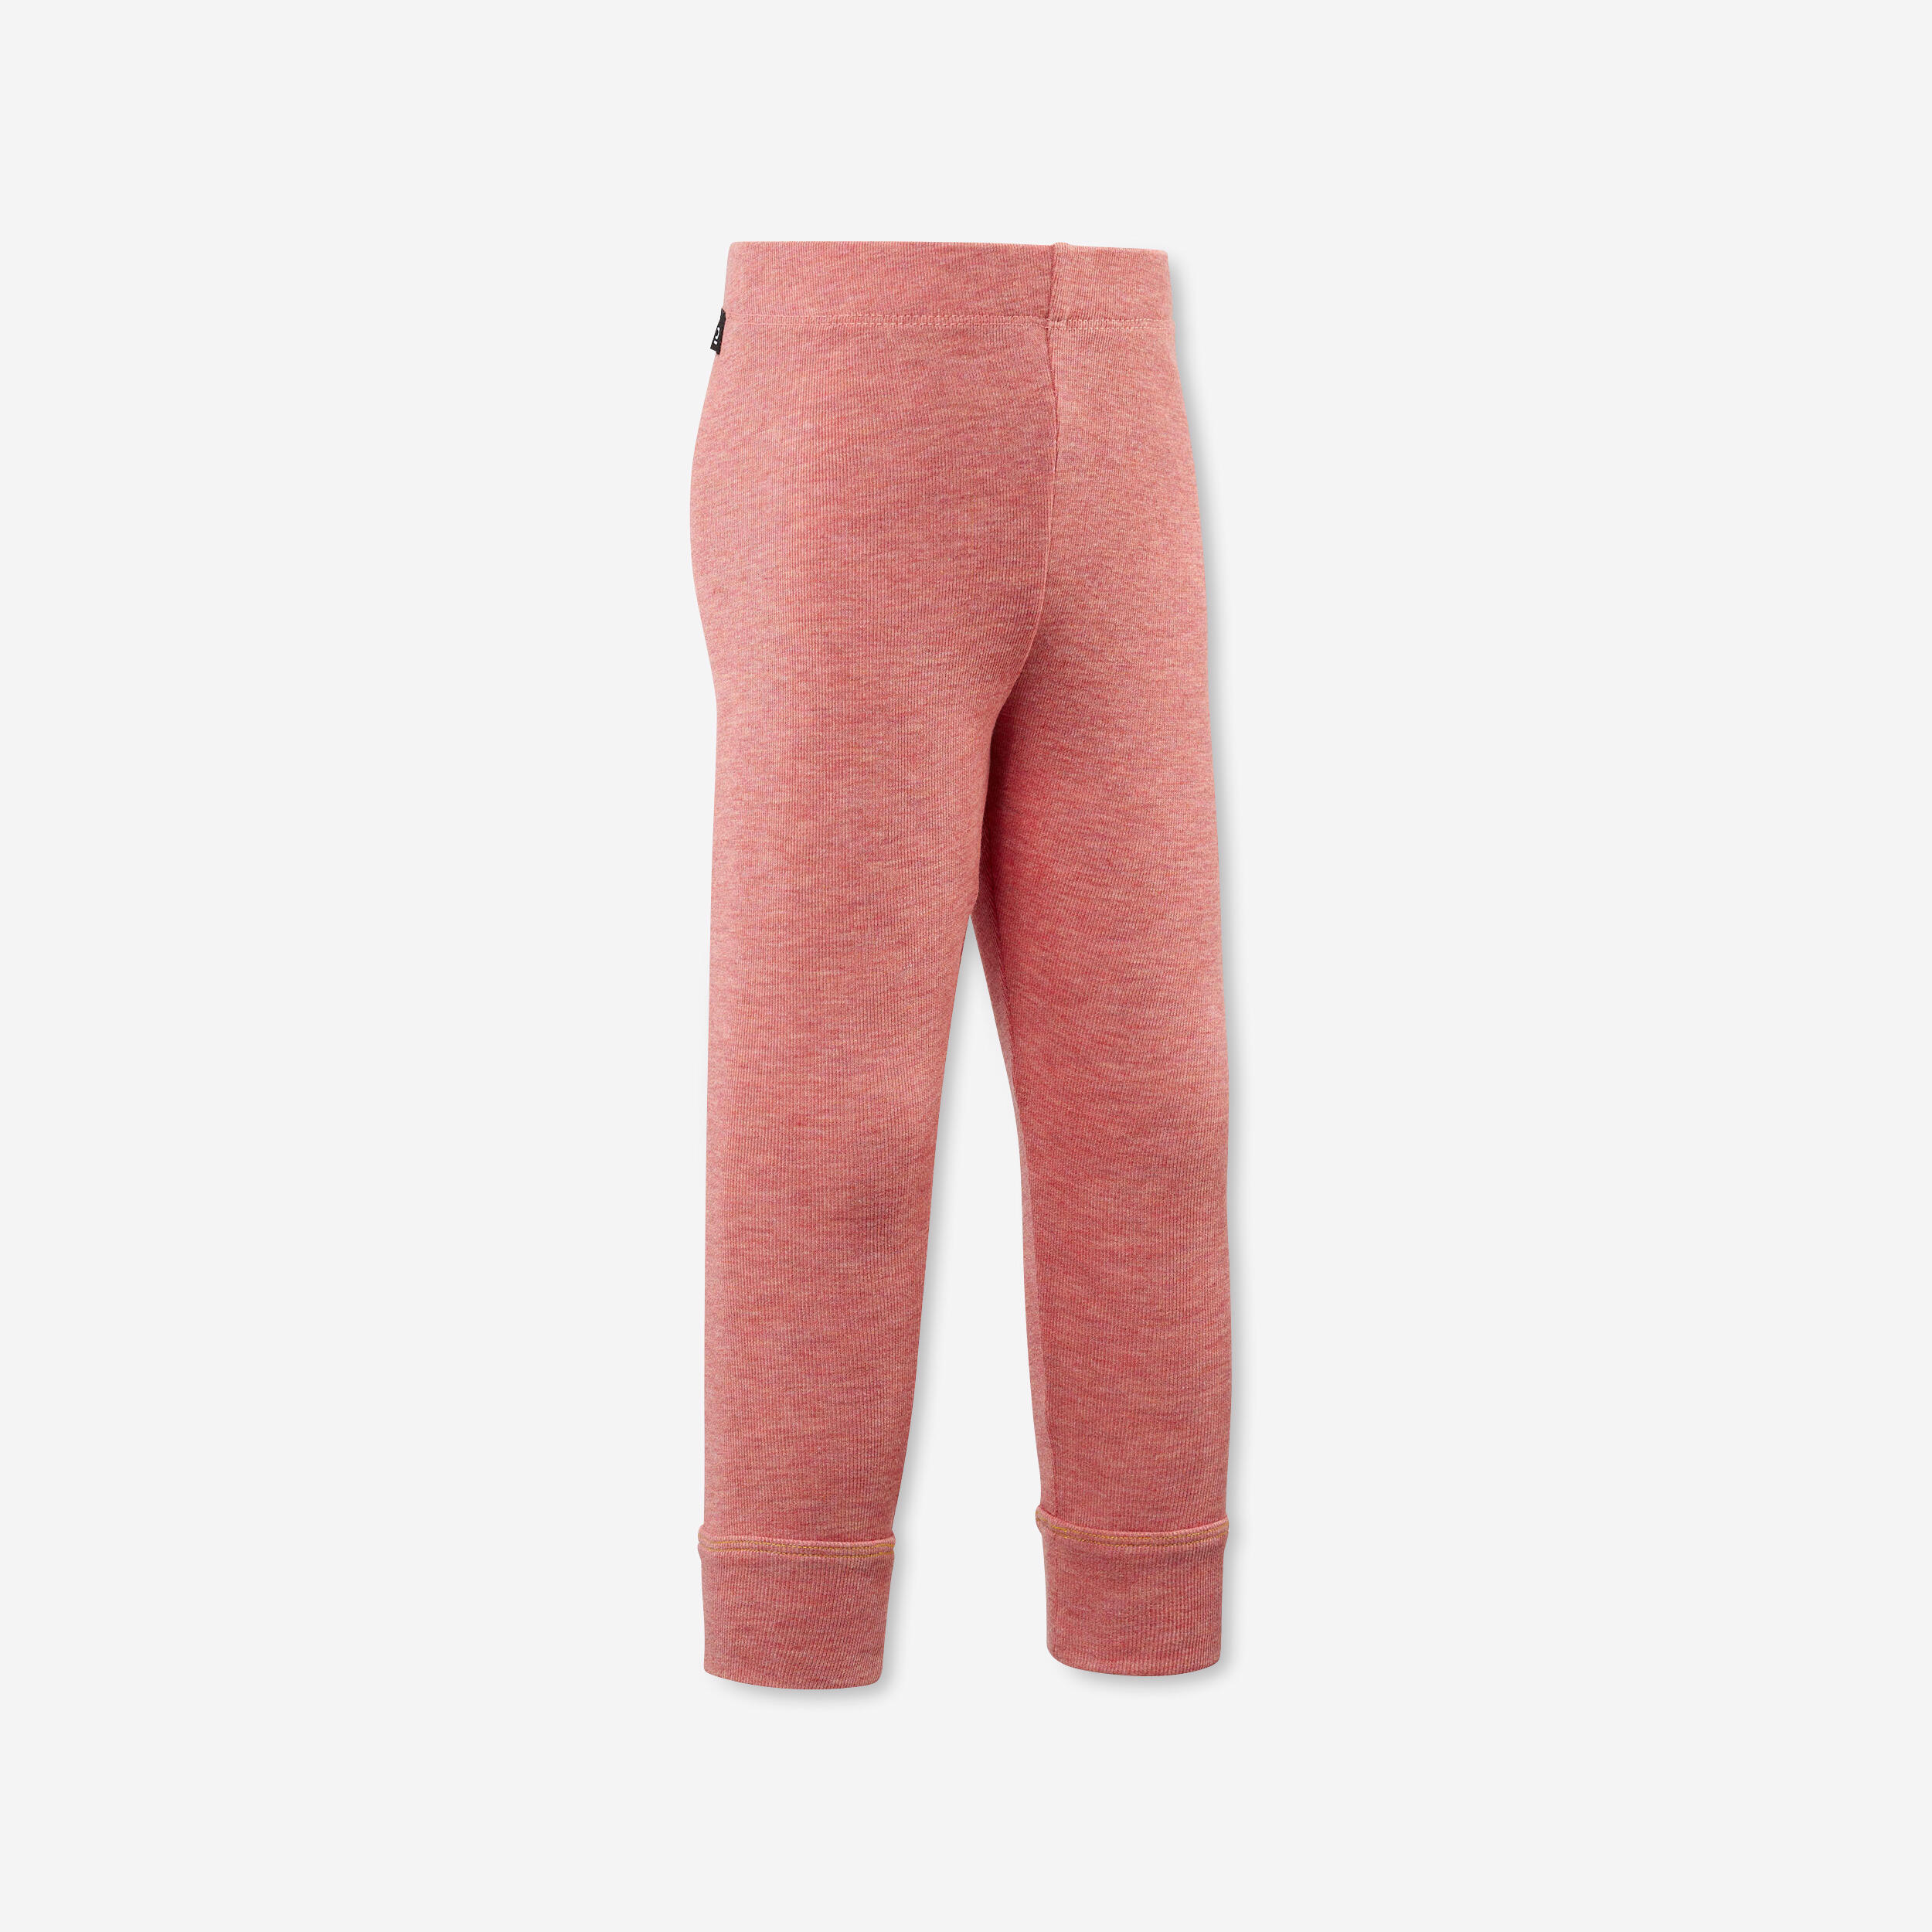 WEDZE Base layer trousers, Baby ski leggings - WARM pink